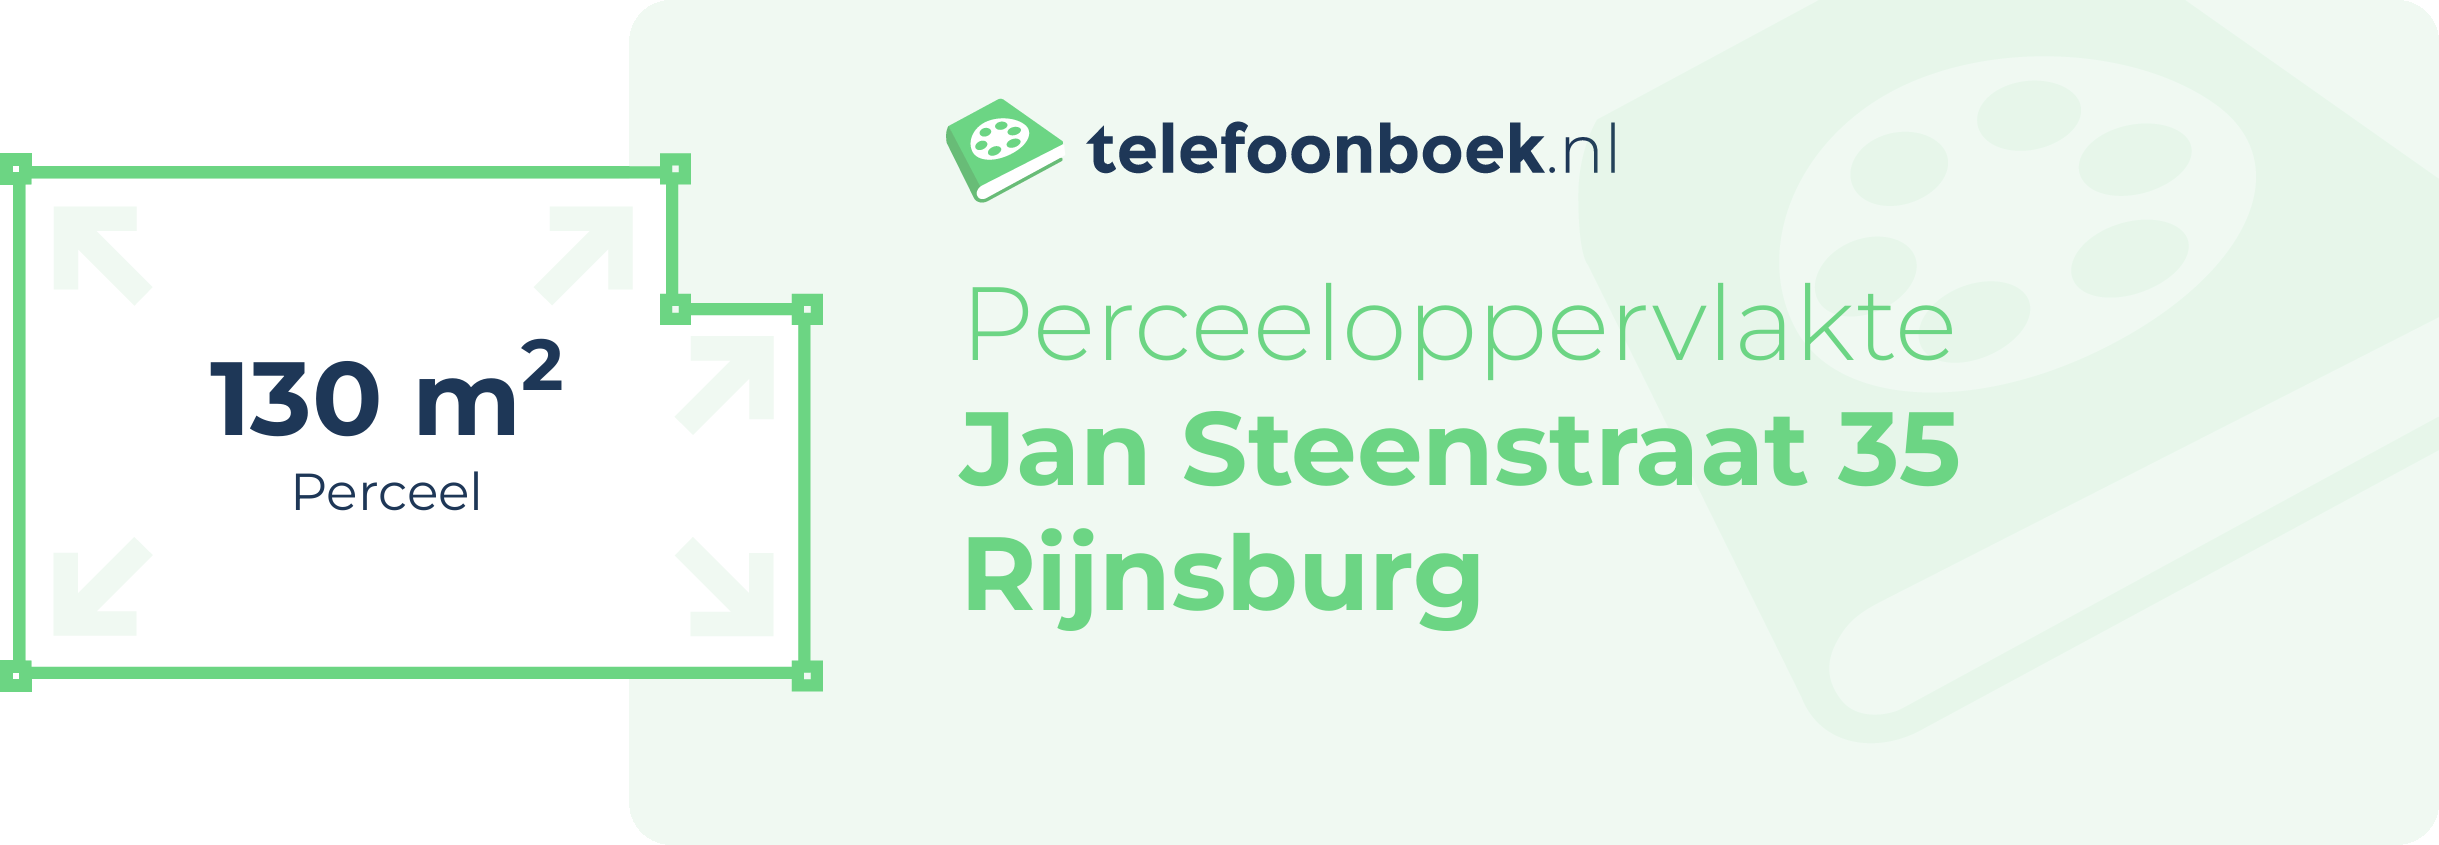 Perceeloppervlakte Jan Steenstraat 35 Rijnsburg